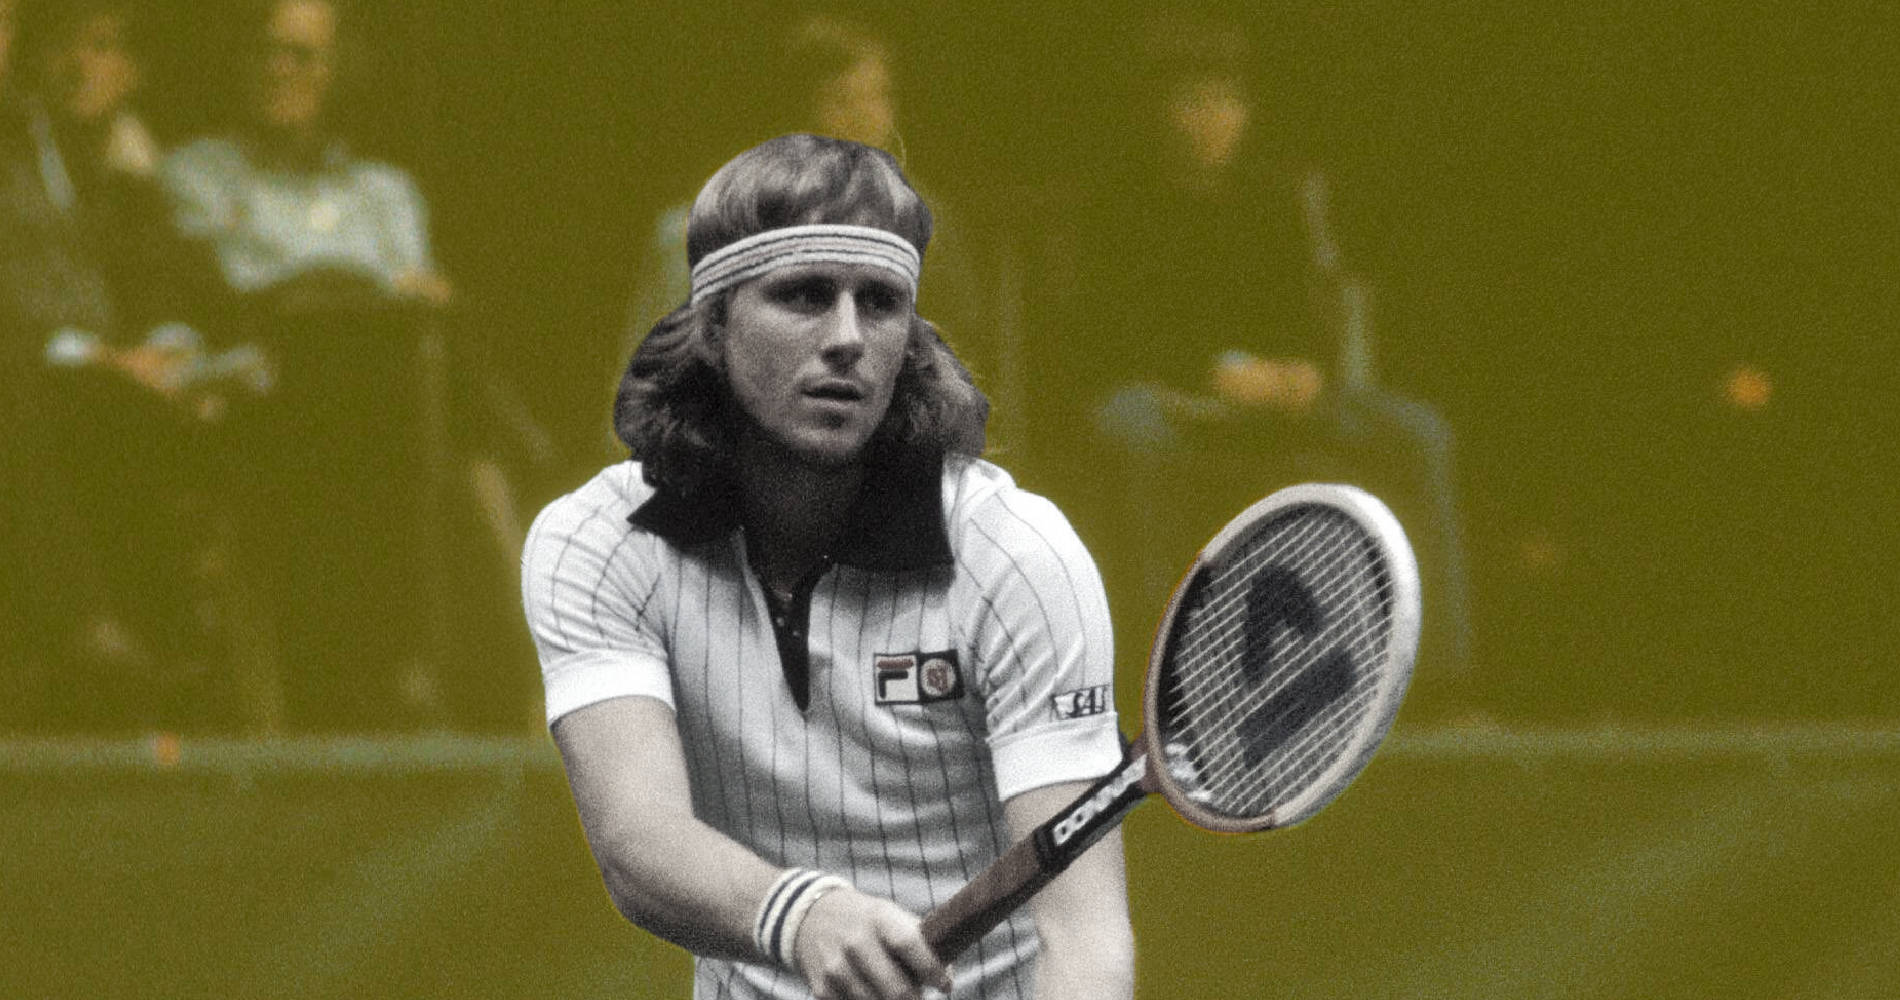 World's Top Ranked Tennis Player Björn Borg Wallpaper